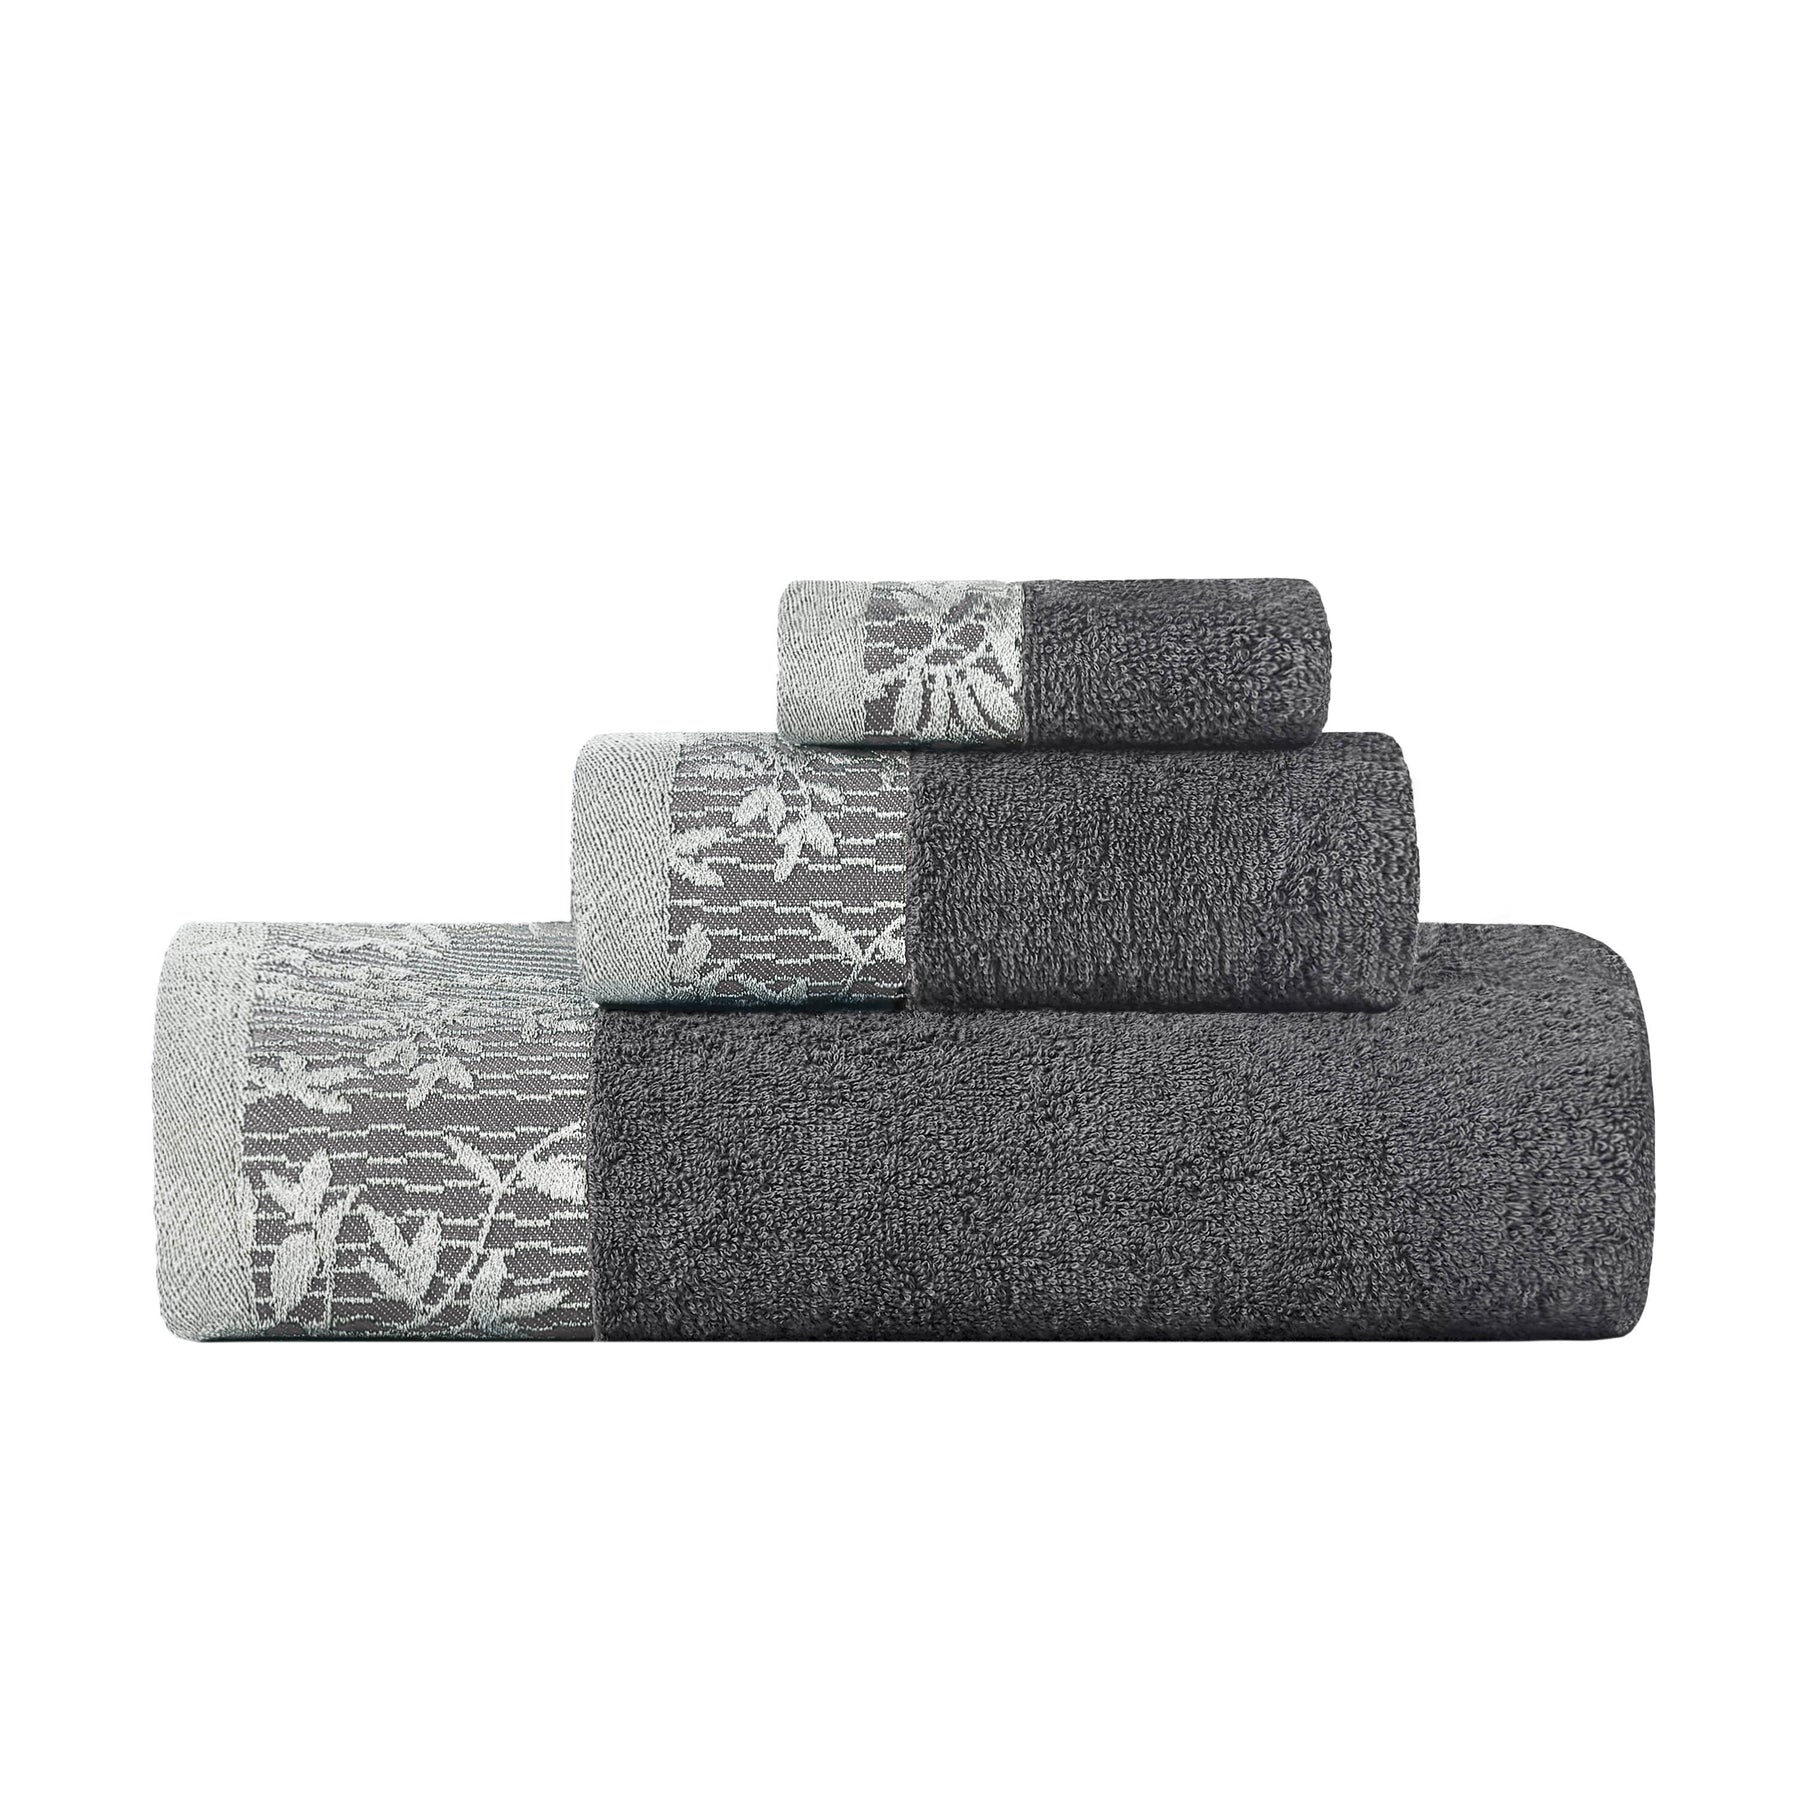 Superior Wisteria Cotton Floral Jacquard 3 Piece Towel Set - Grey